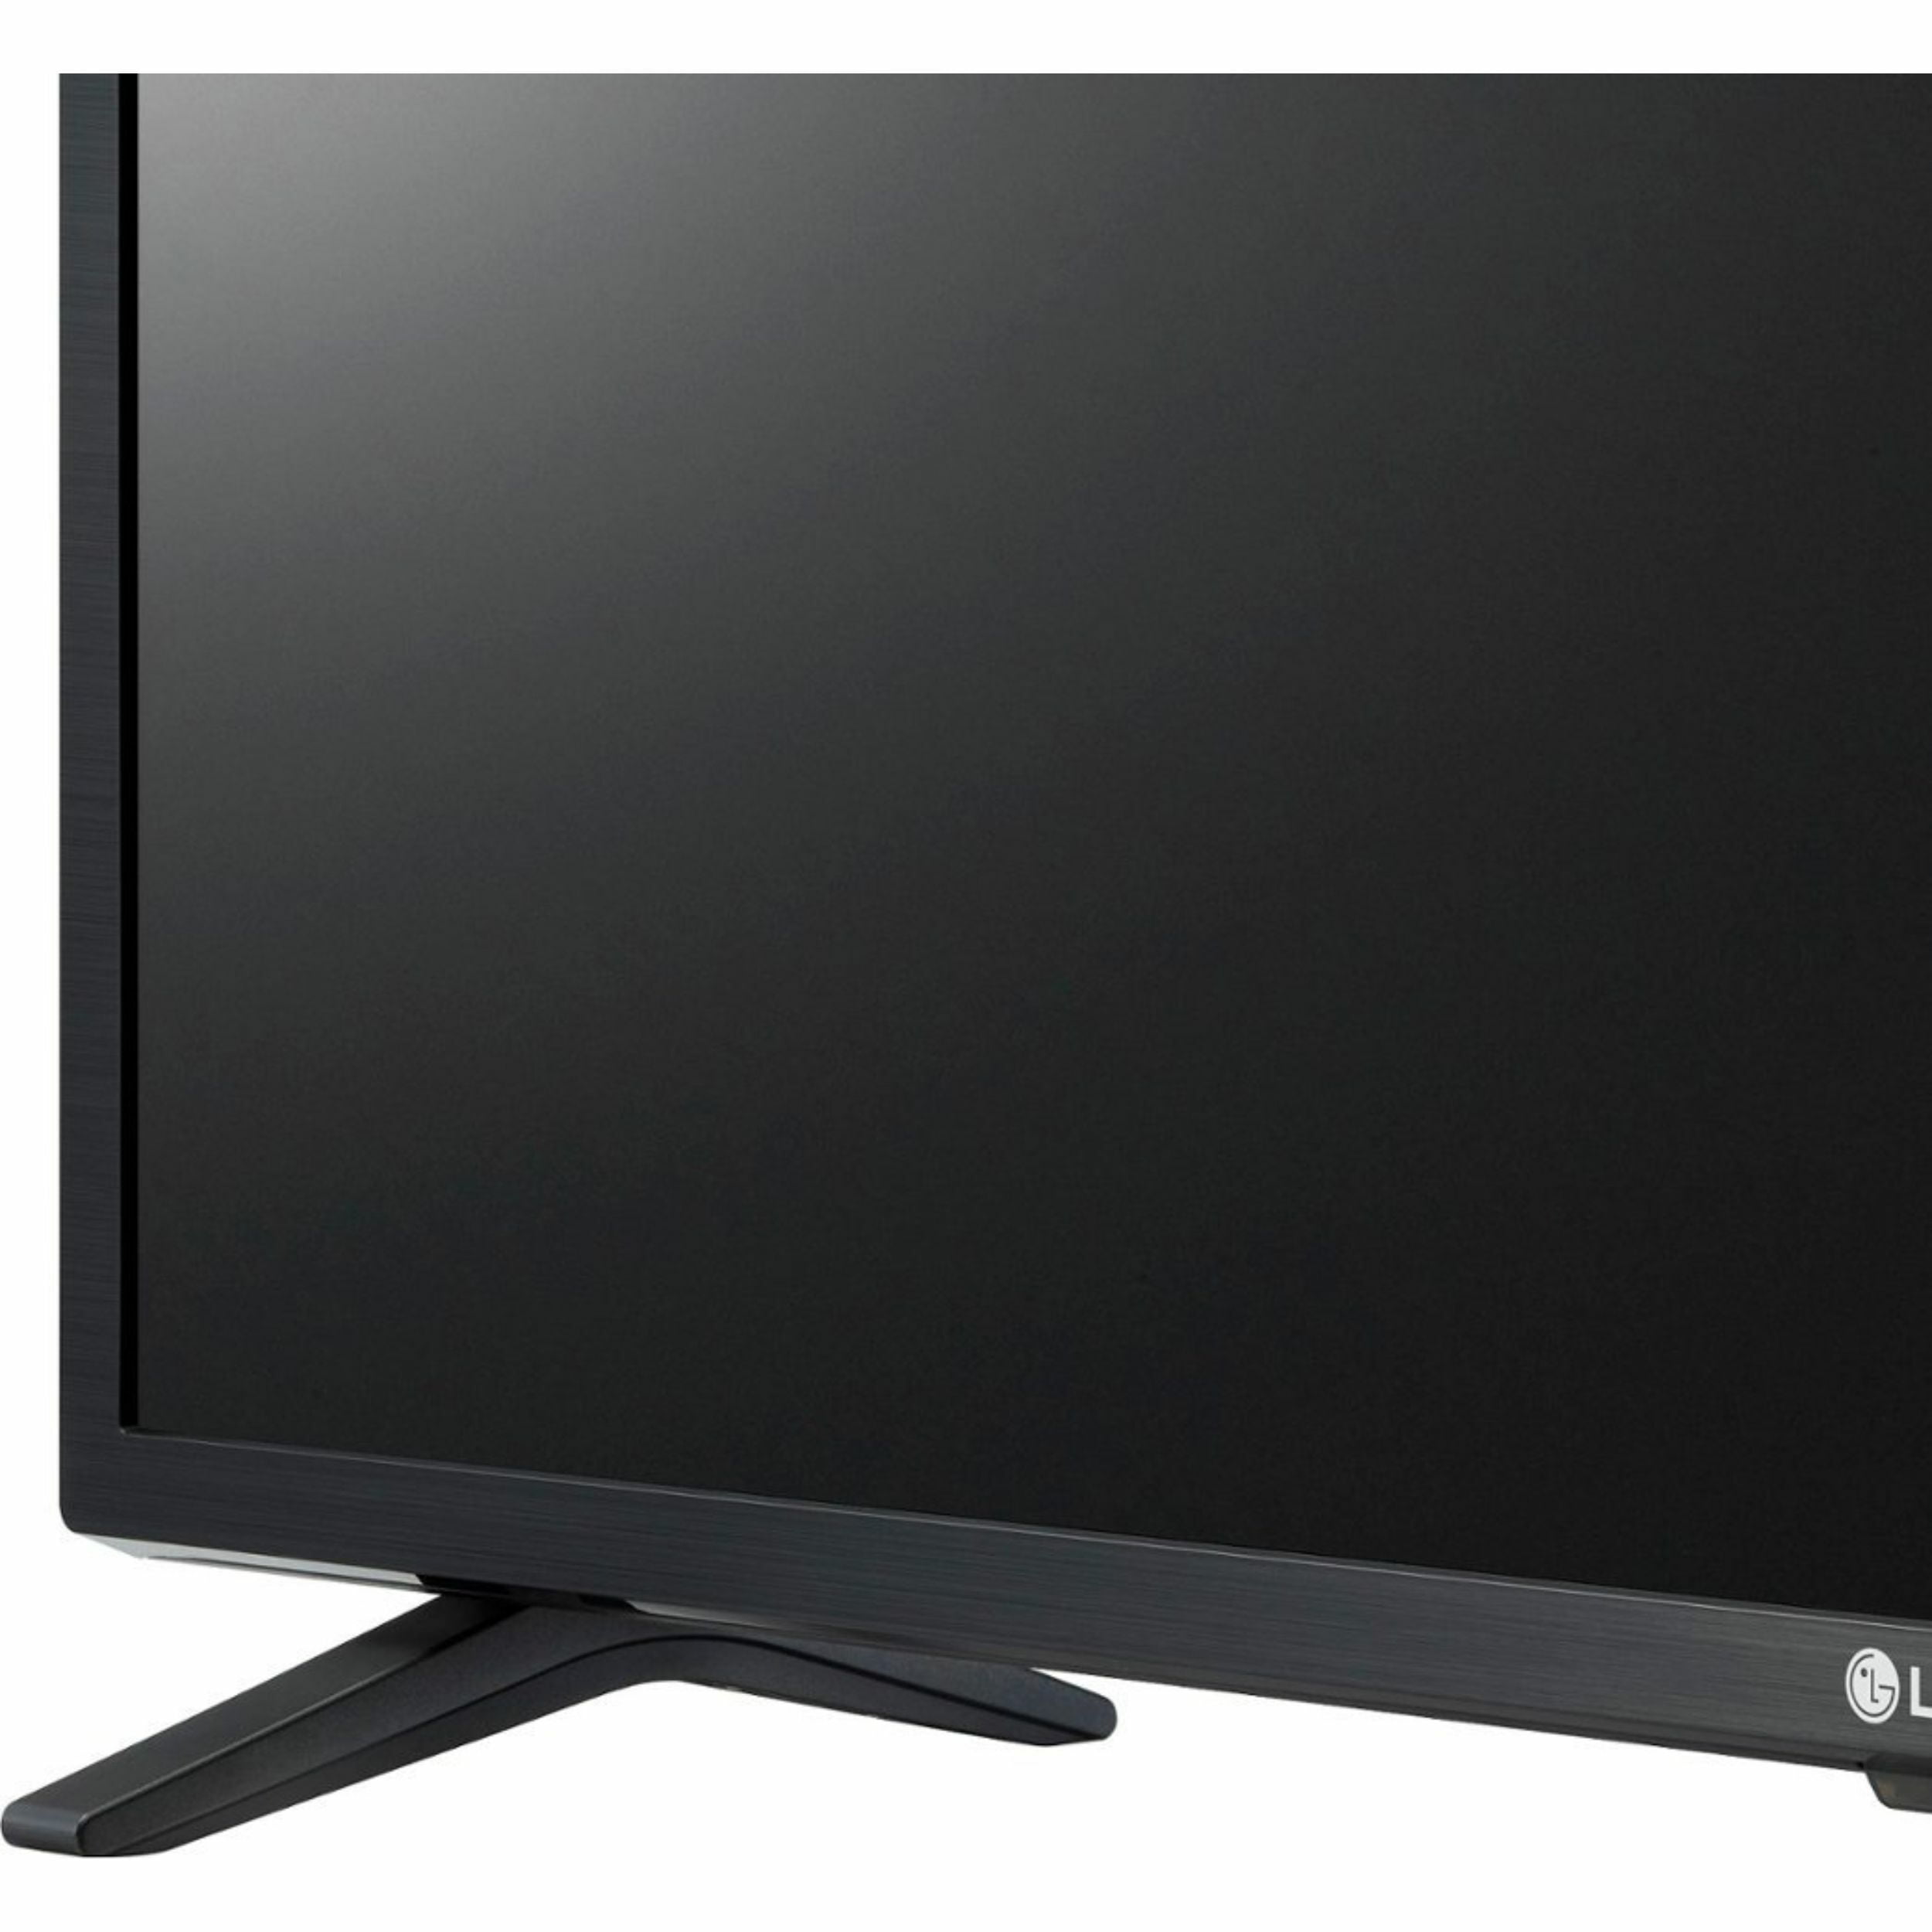 32 (80cm), TV LED Plus, Full HD, 3D, Smart TV, MCI 400, Dalle IPS, Cinema Screen, WIFI - LG 32LA660S